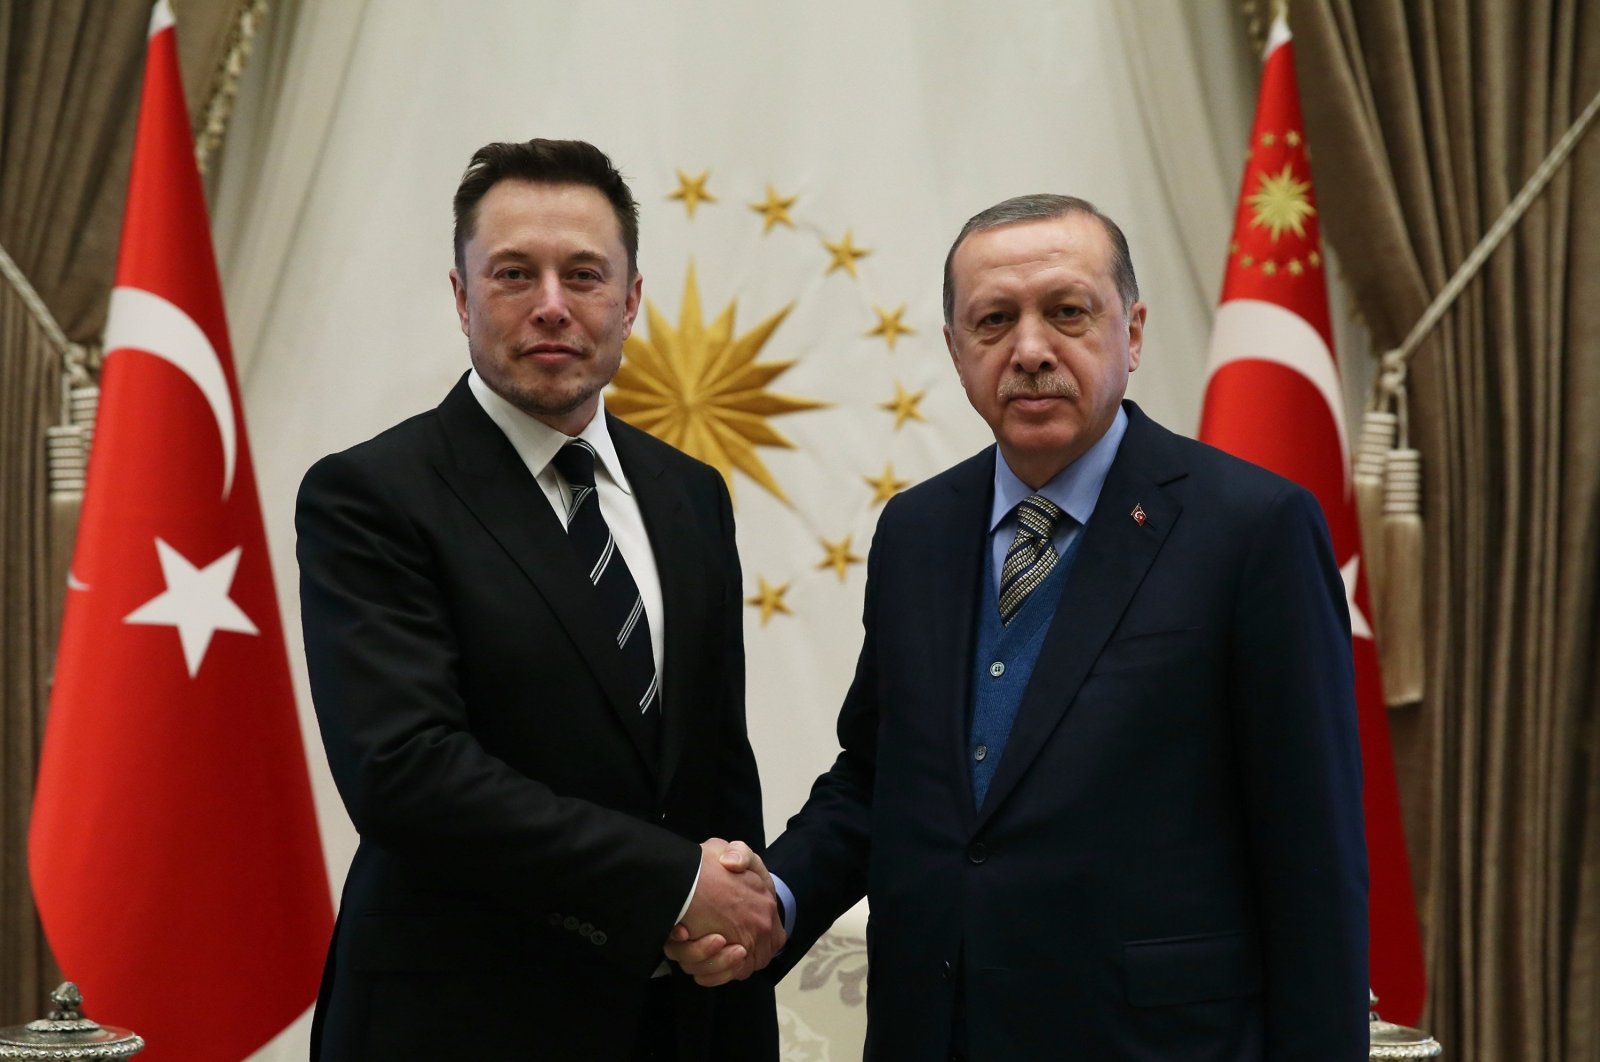 Tesla and SpaceX CEO Elon Musk (L) shakes hands with President Recep Tayyip Erdoğan during a visit to Ankara, Turkey, Nov. 8, 2017. (IHA Photo)